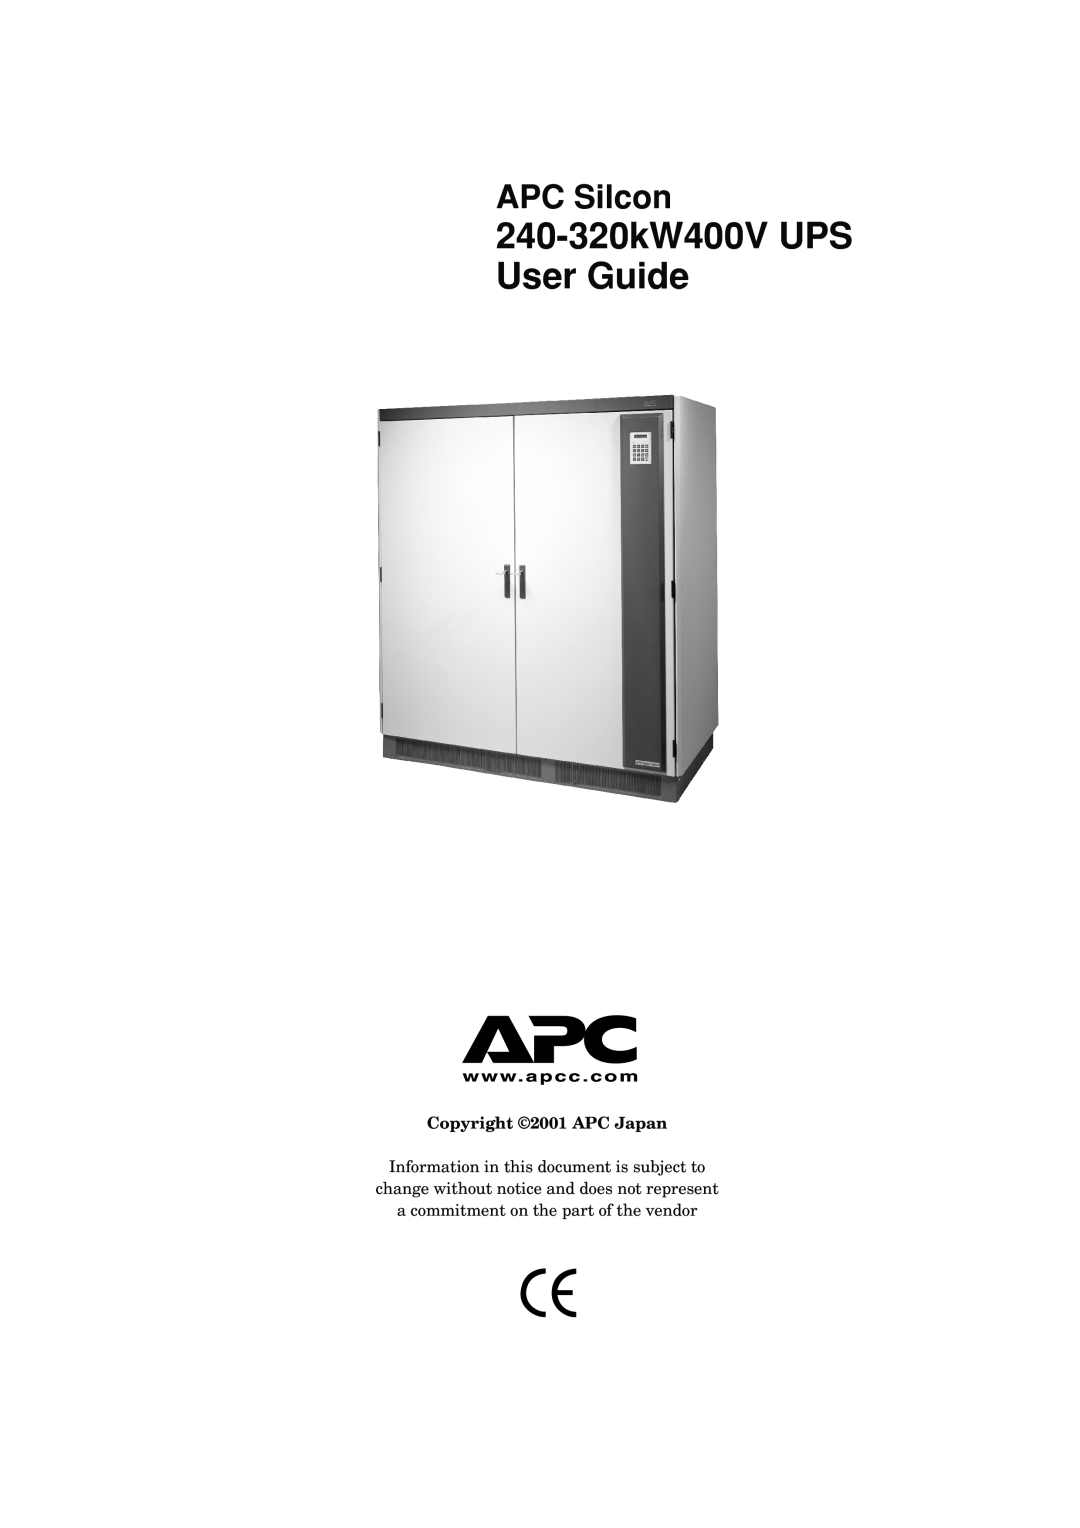 American Power Conversion manual Copyright 2001 APC Japan, 240-320kW400V UPS User Guide, APC Silcon 